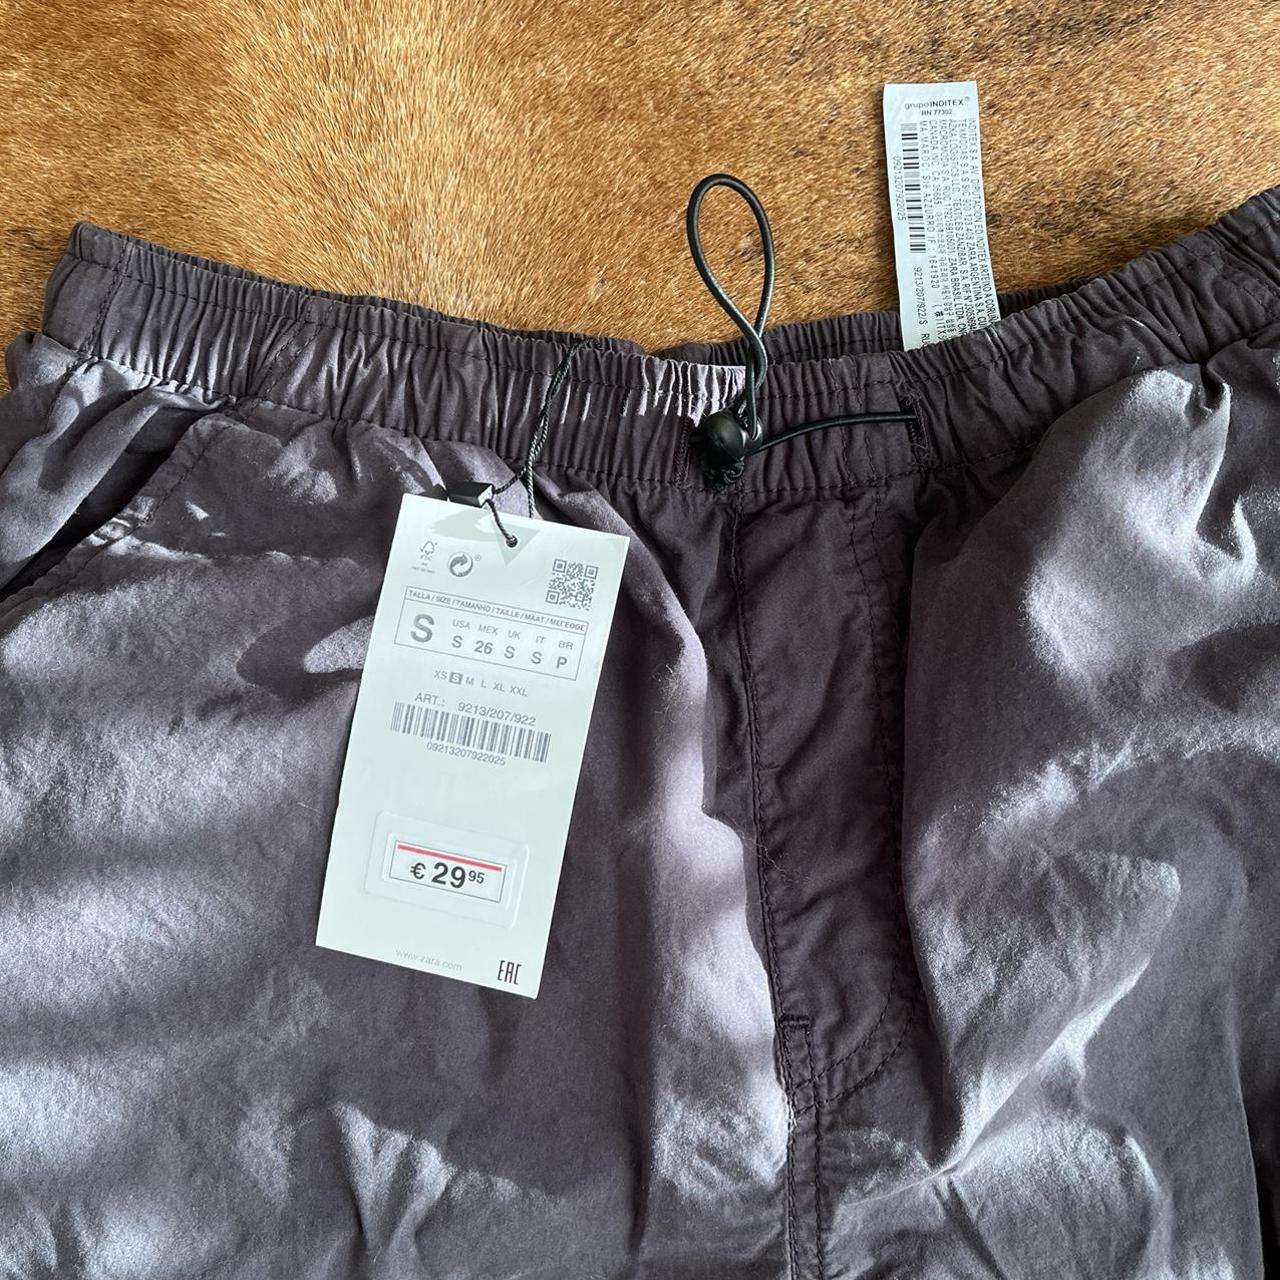 Zara grey parachute pant trousers Brand new!... - Depop